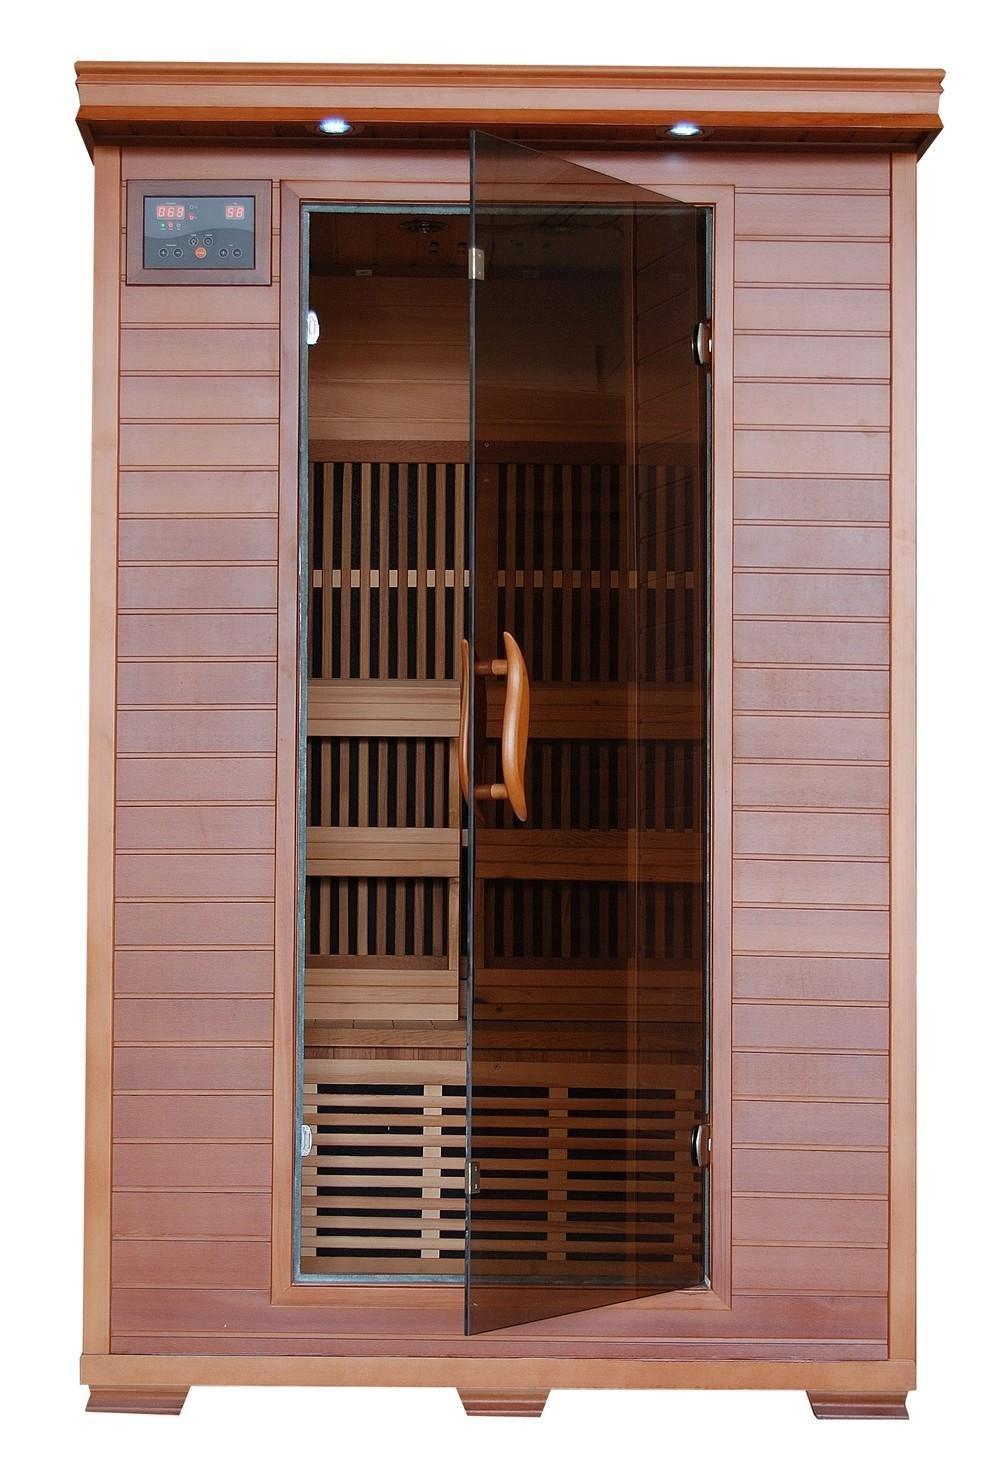 Heatwave  2-Person Cedar Deluxe Sauna with Carbon Heaters